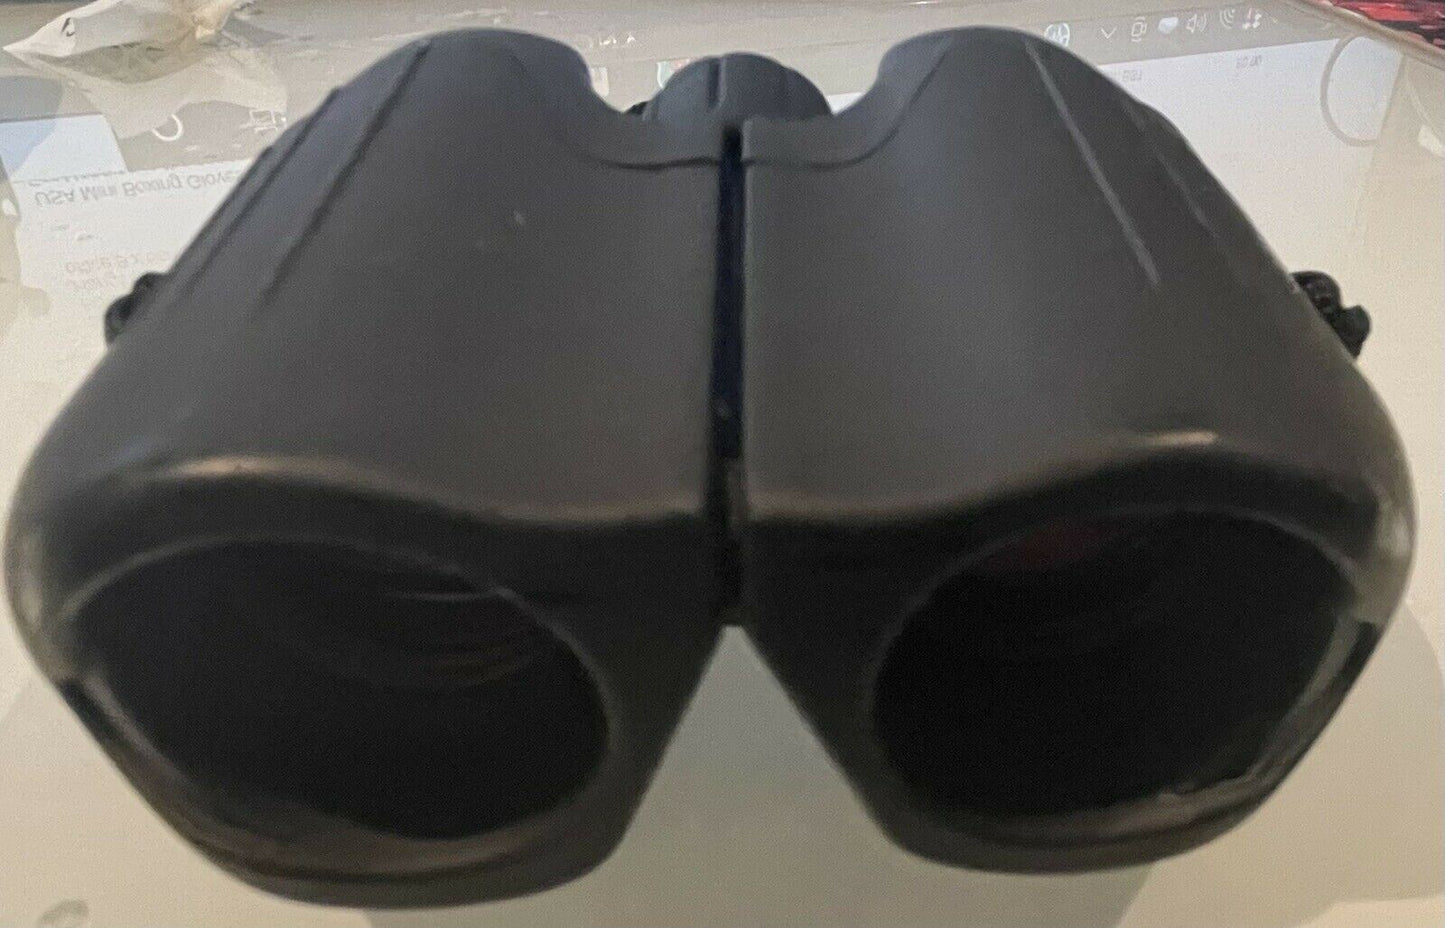 JL Breaker Compact Binoculars 8 x 21 BLACK RRP £69.99 PERFECT FOR BIRD WATCHING